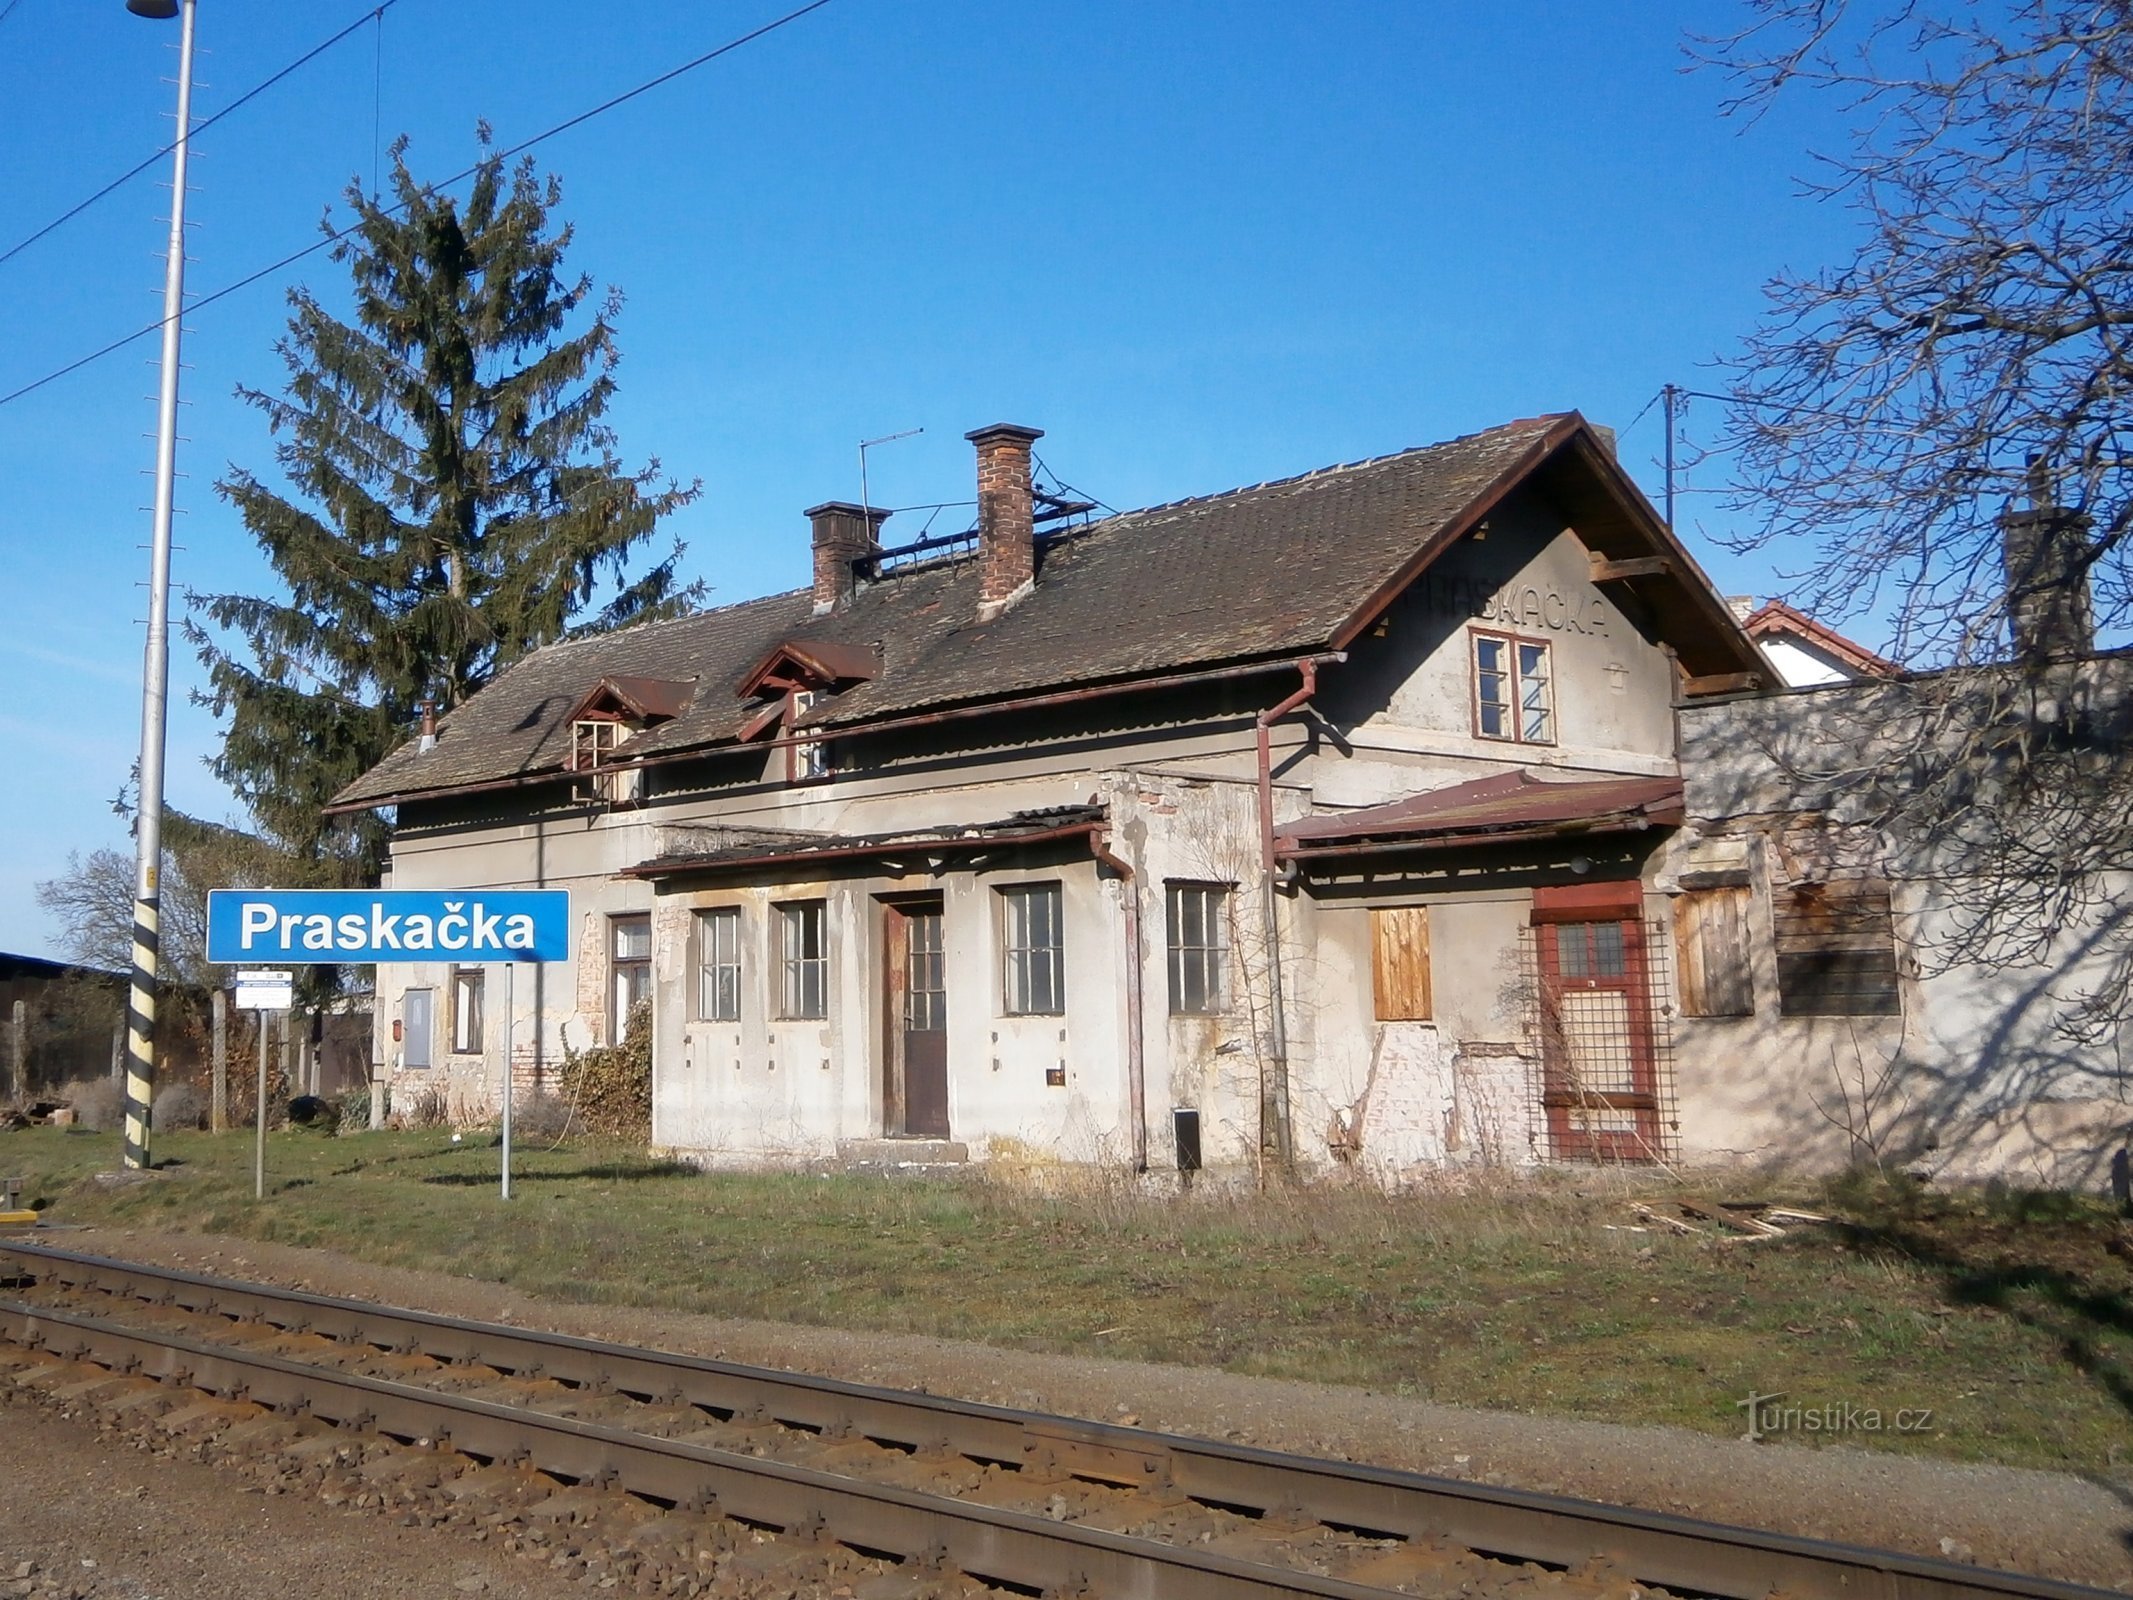 Den gamle banegård i Praskačka